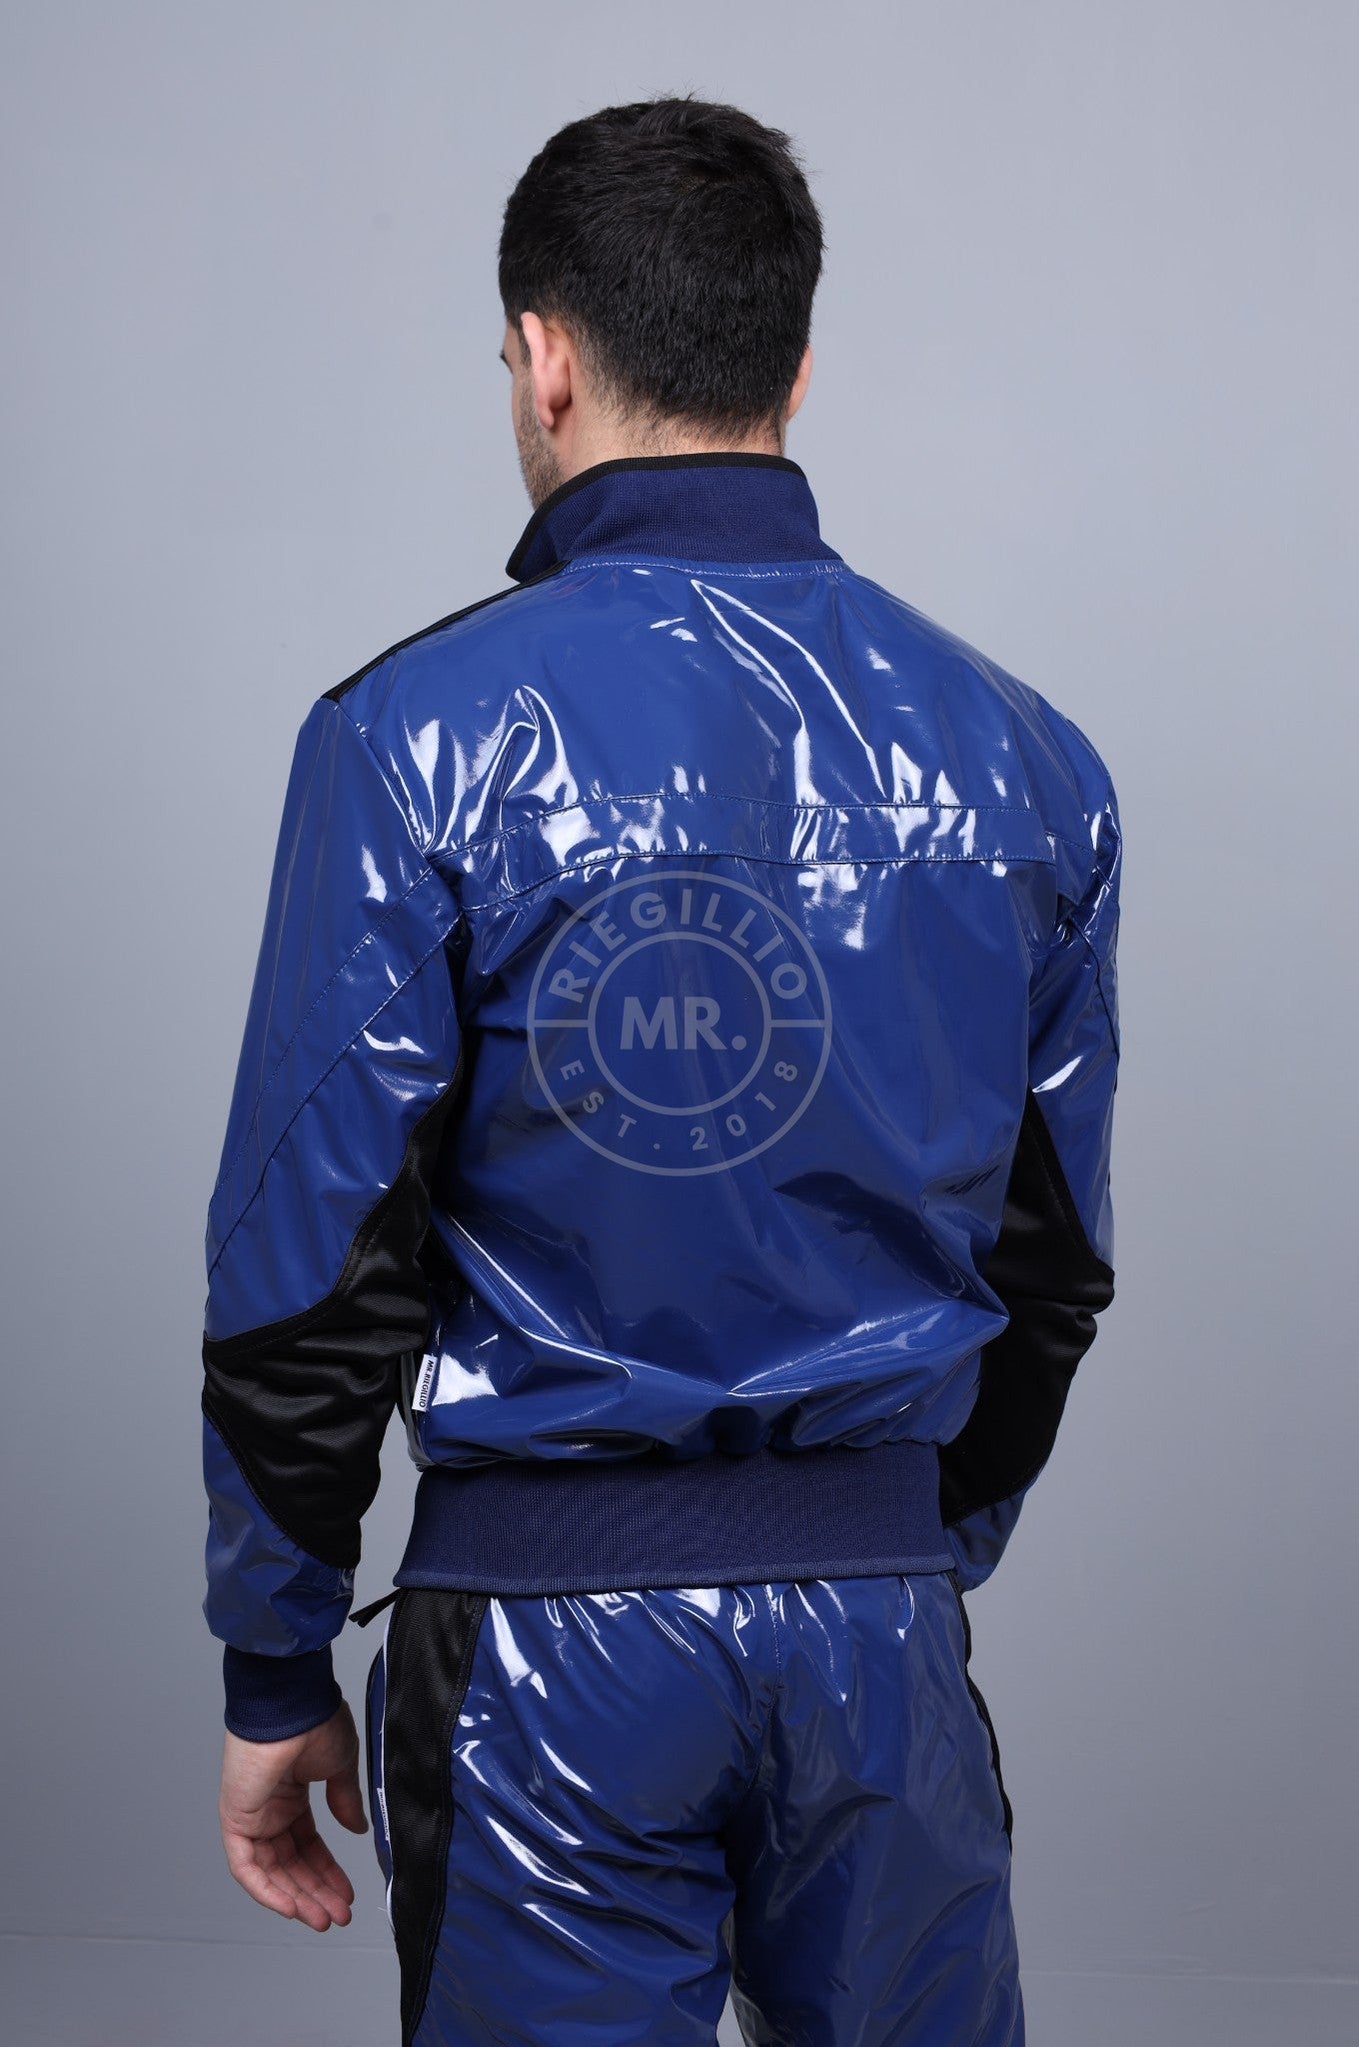 PVC 24 Tracksuit Jacket - Blue at MR. Riegillio